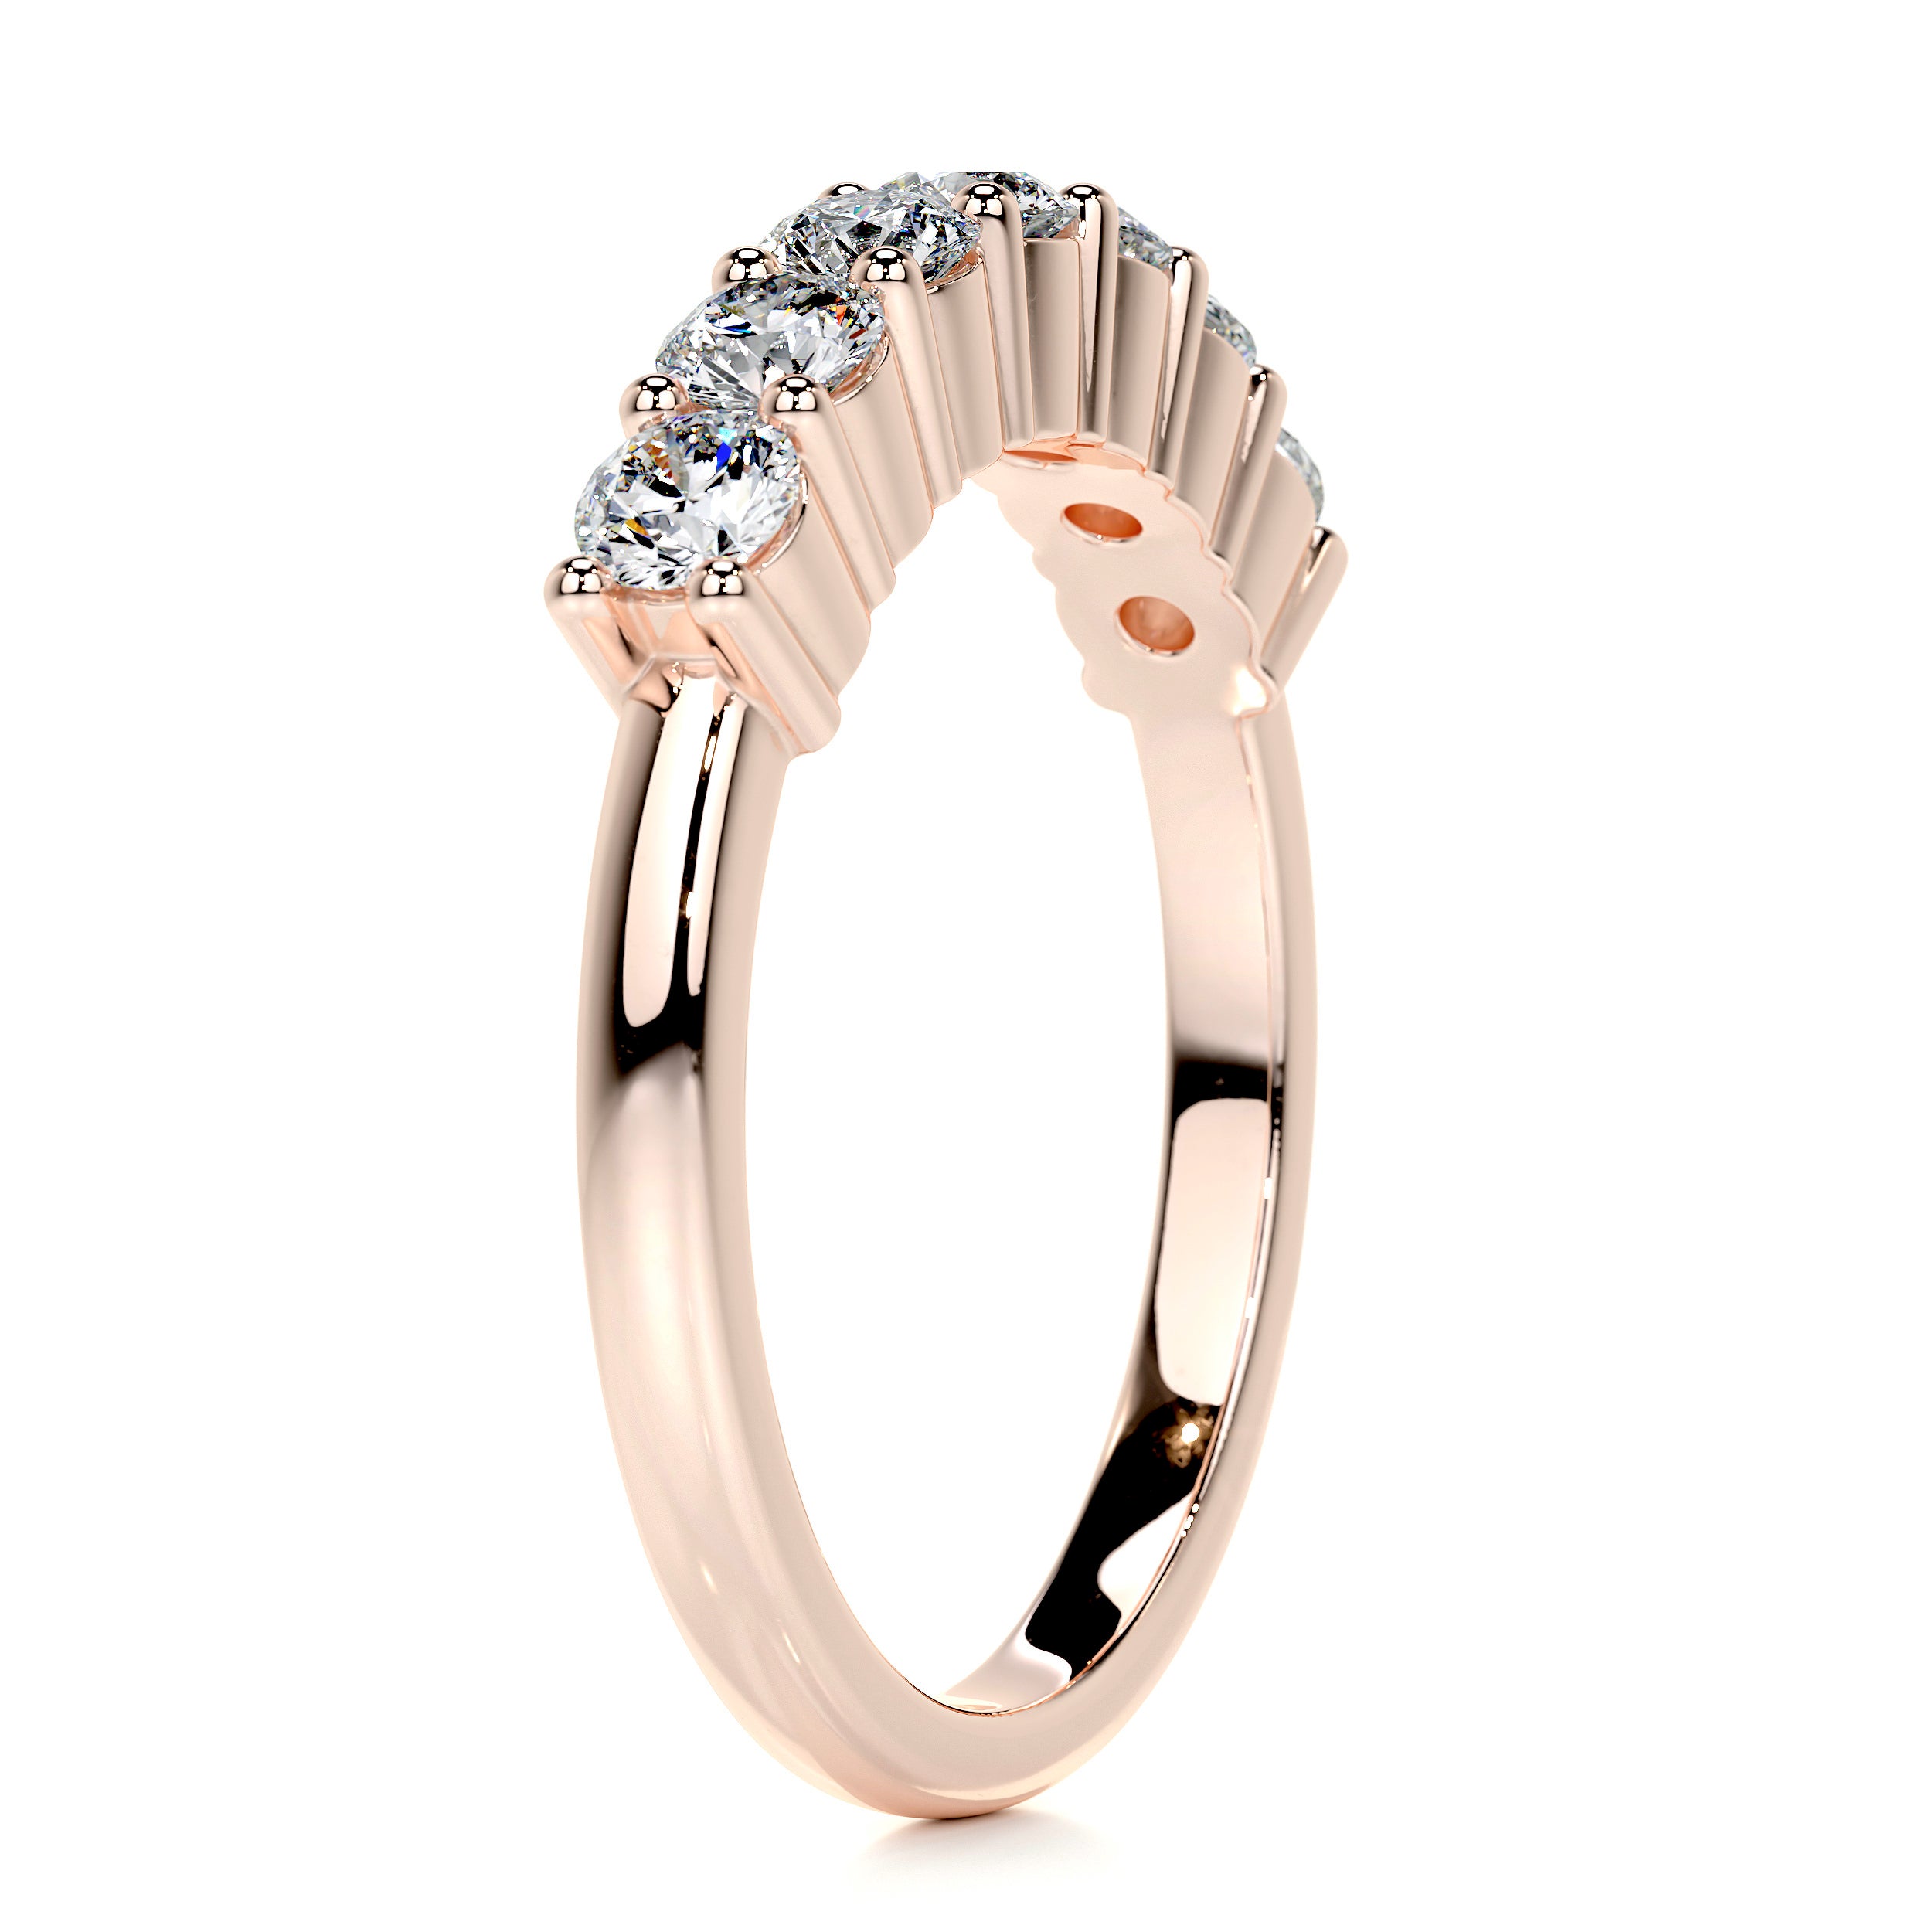 Catherine Diamond Wedding Ring   (0.75 Carat) -14K Rose Gold